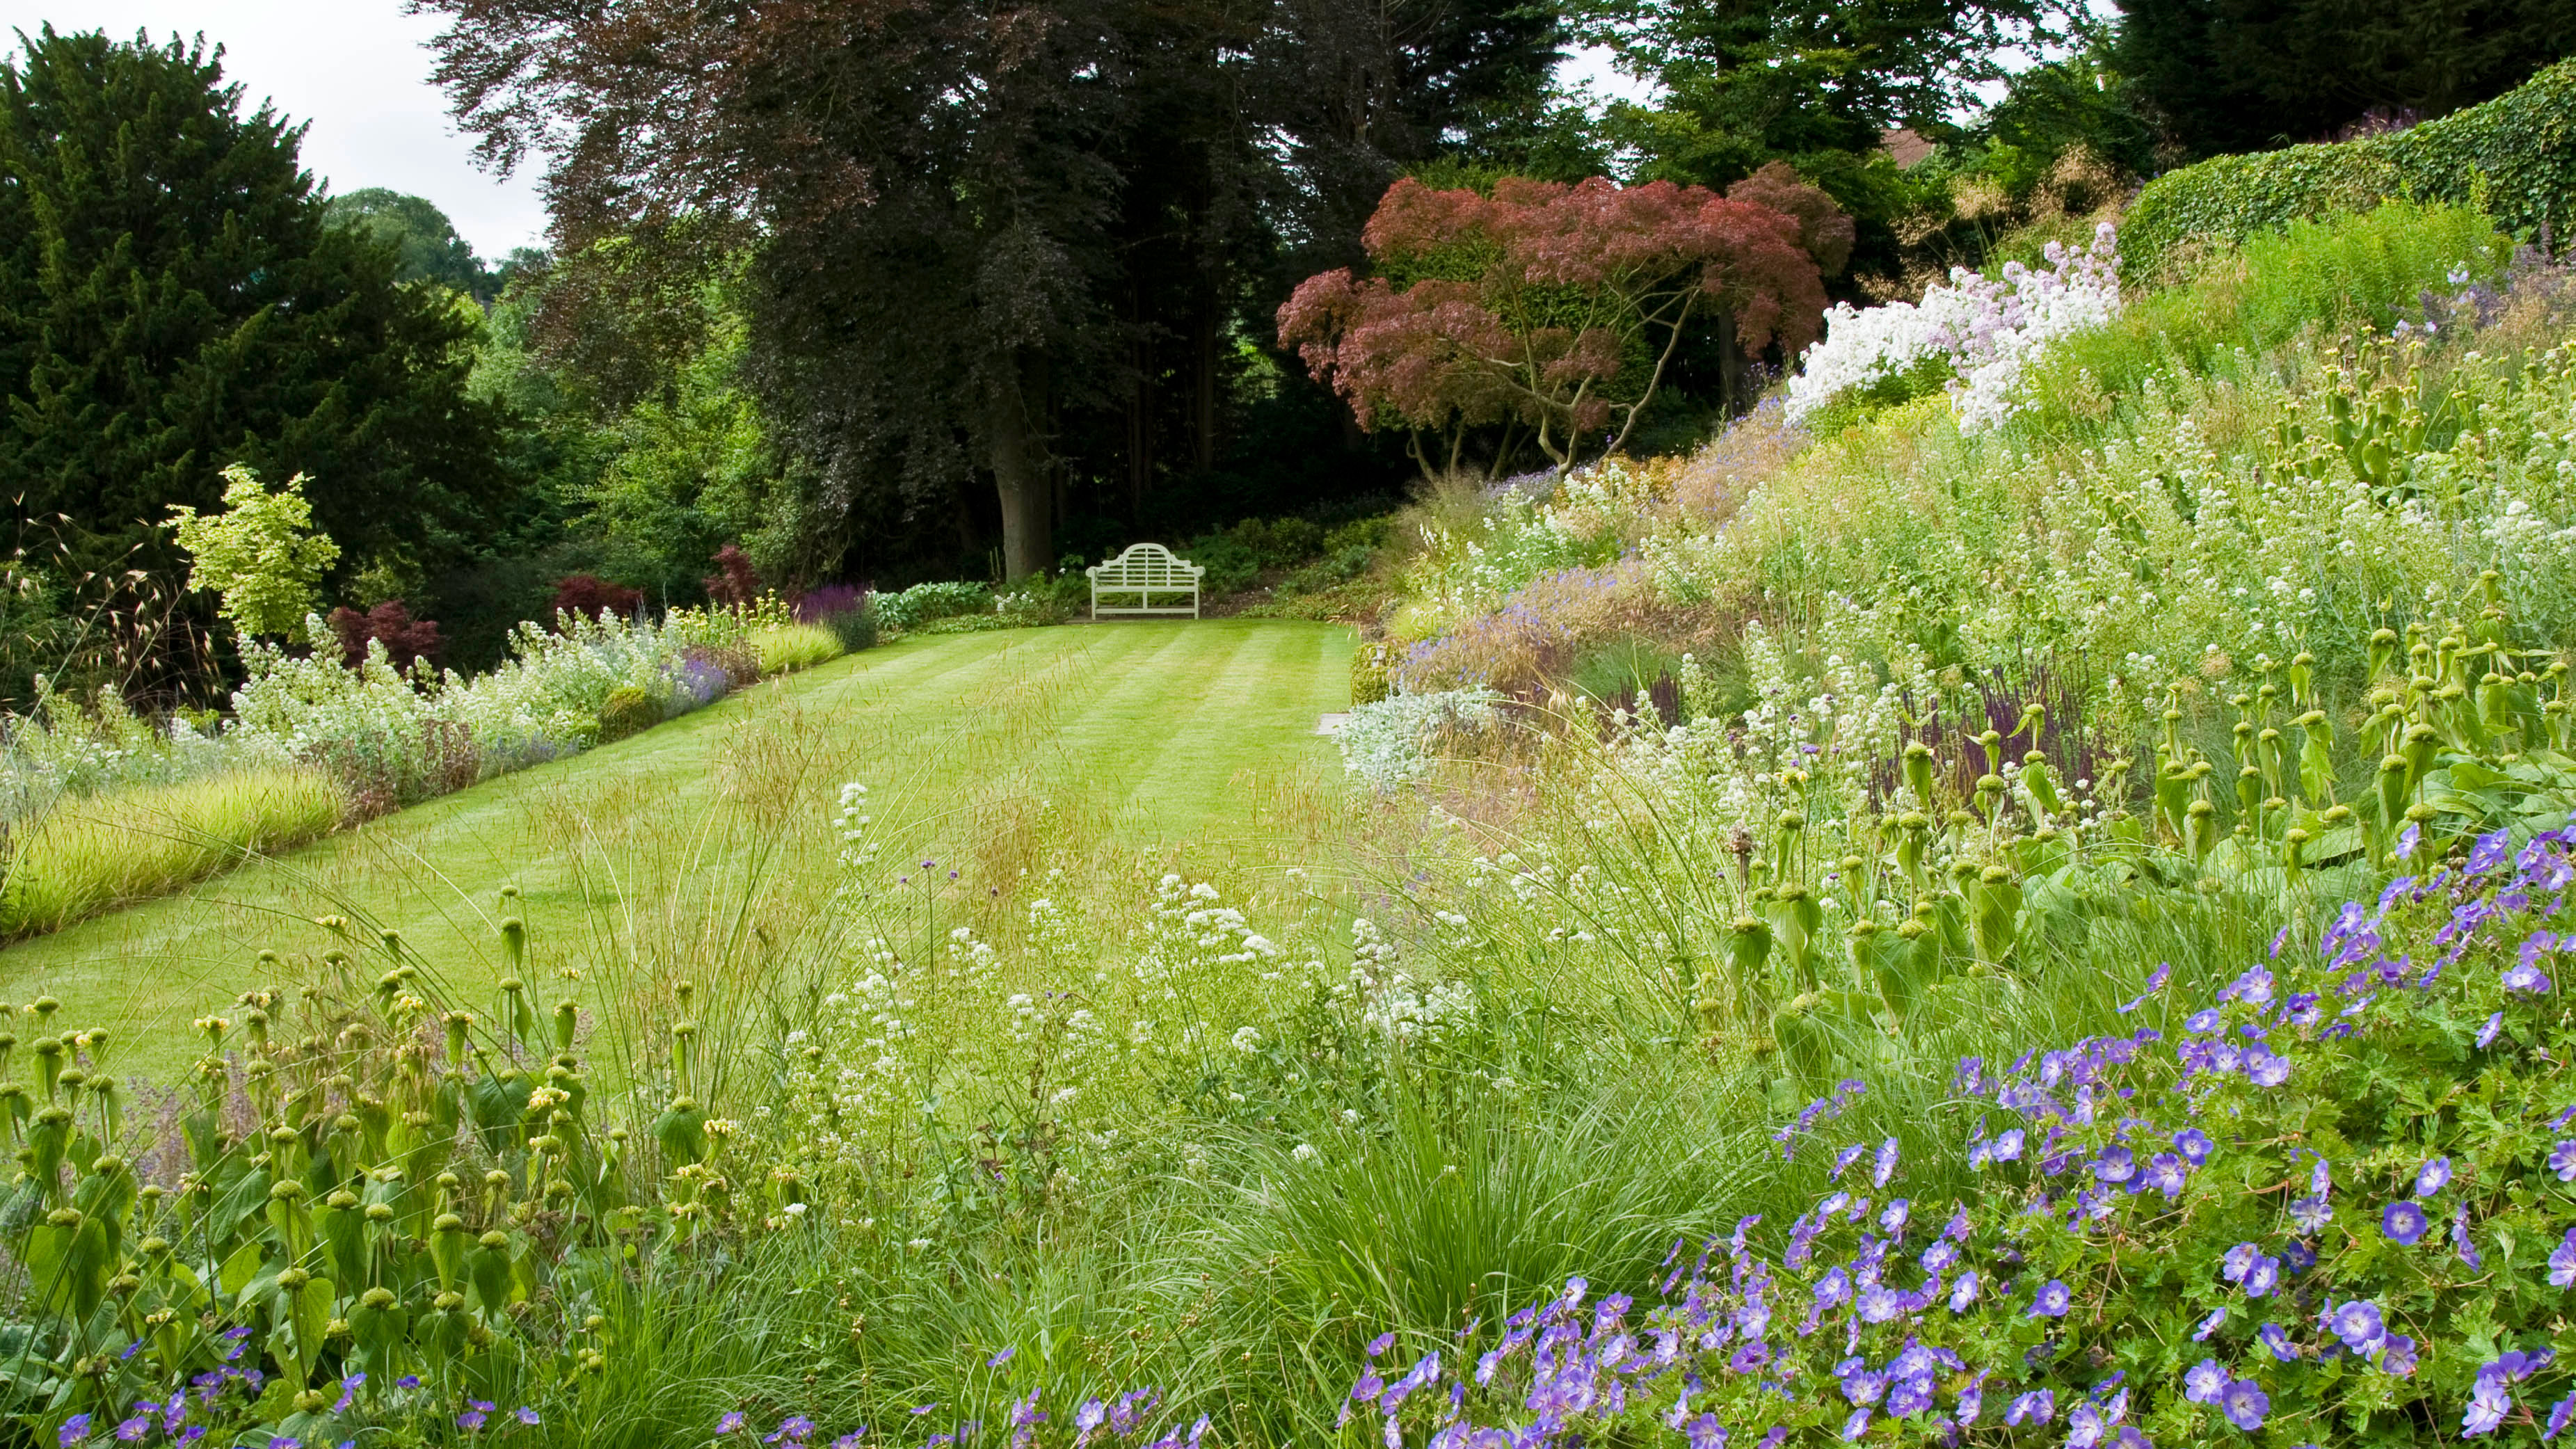 A sunny garden spot with well-draining soil